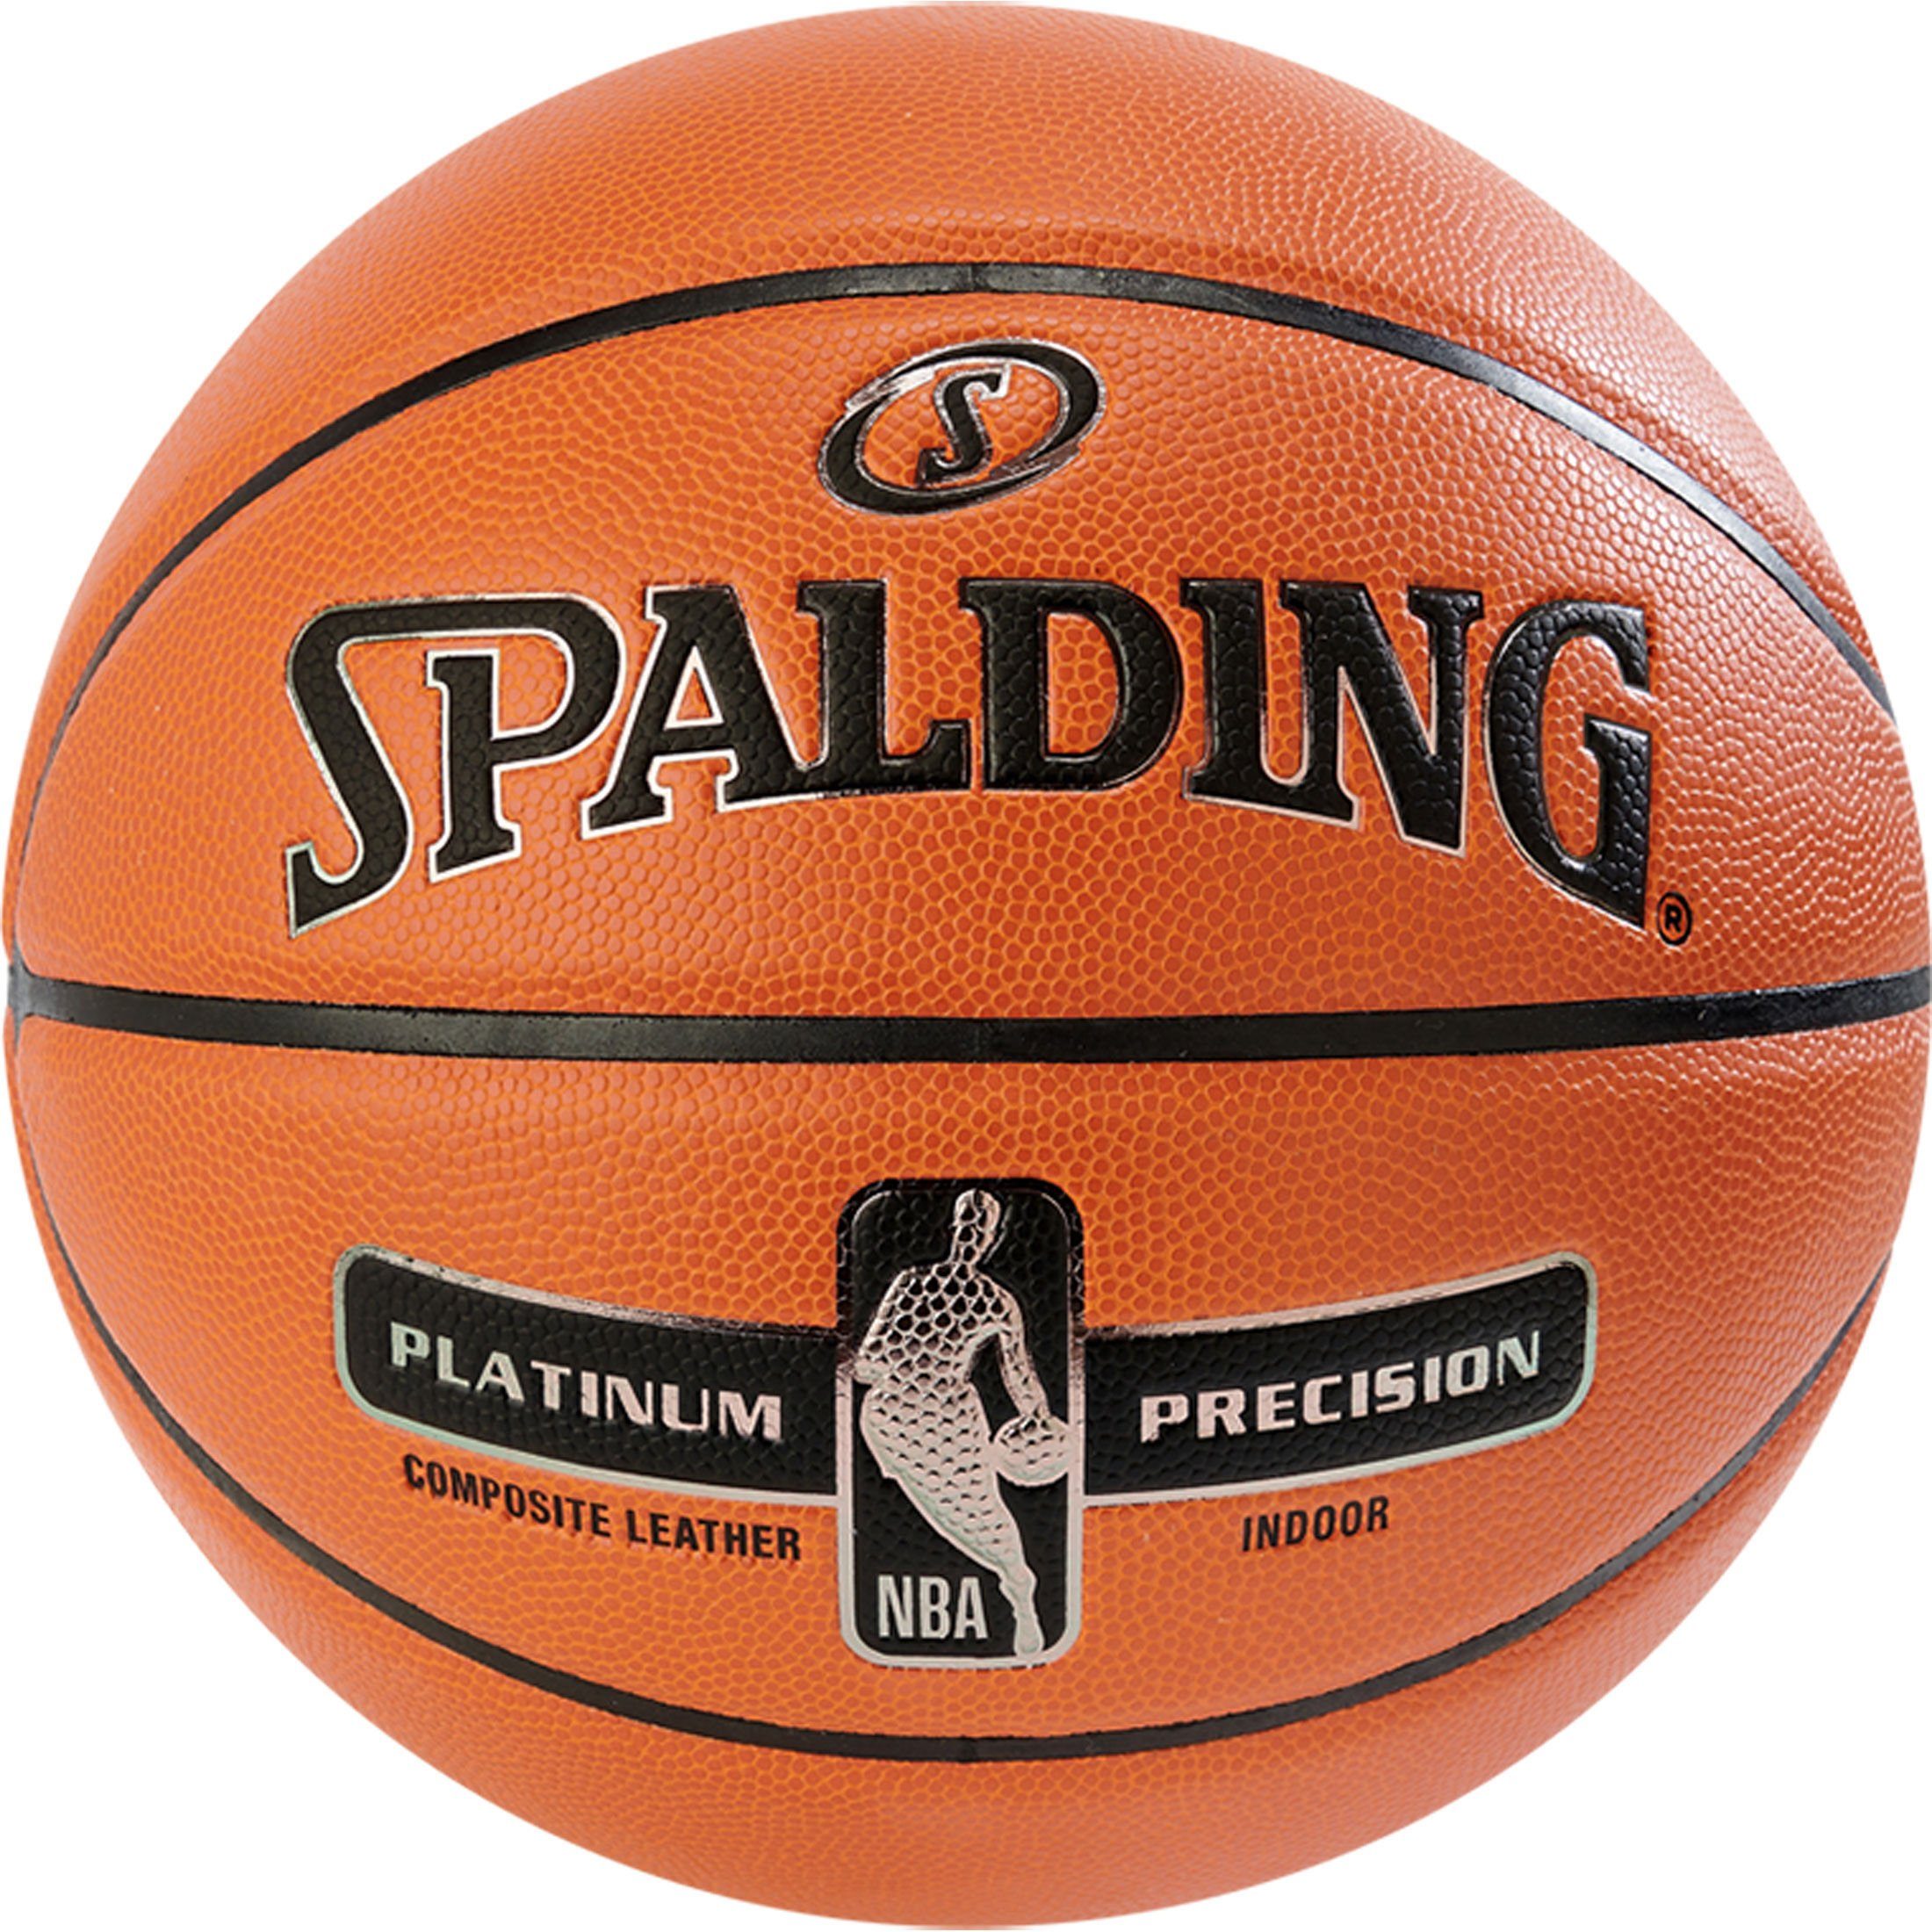 Spalding Basketball NBA Platinum Precision Basketball